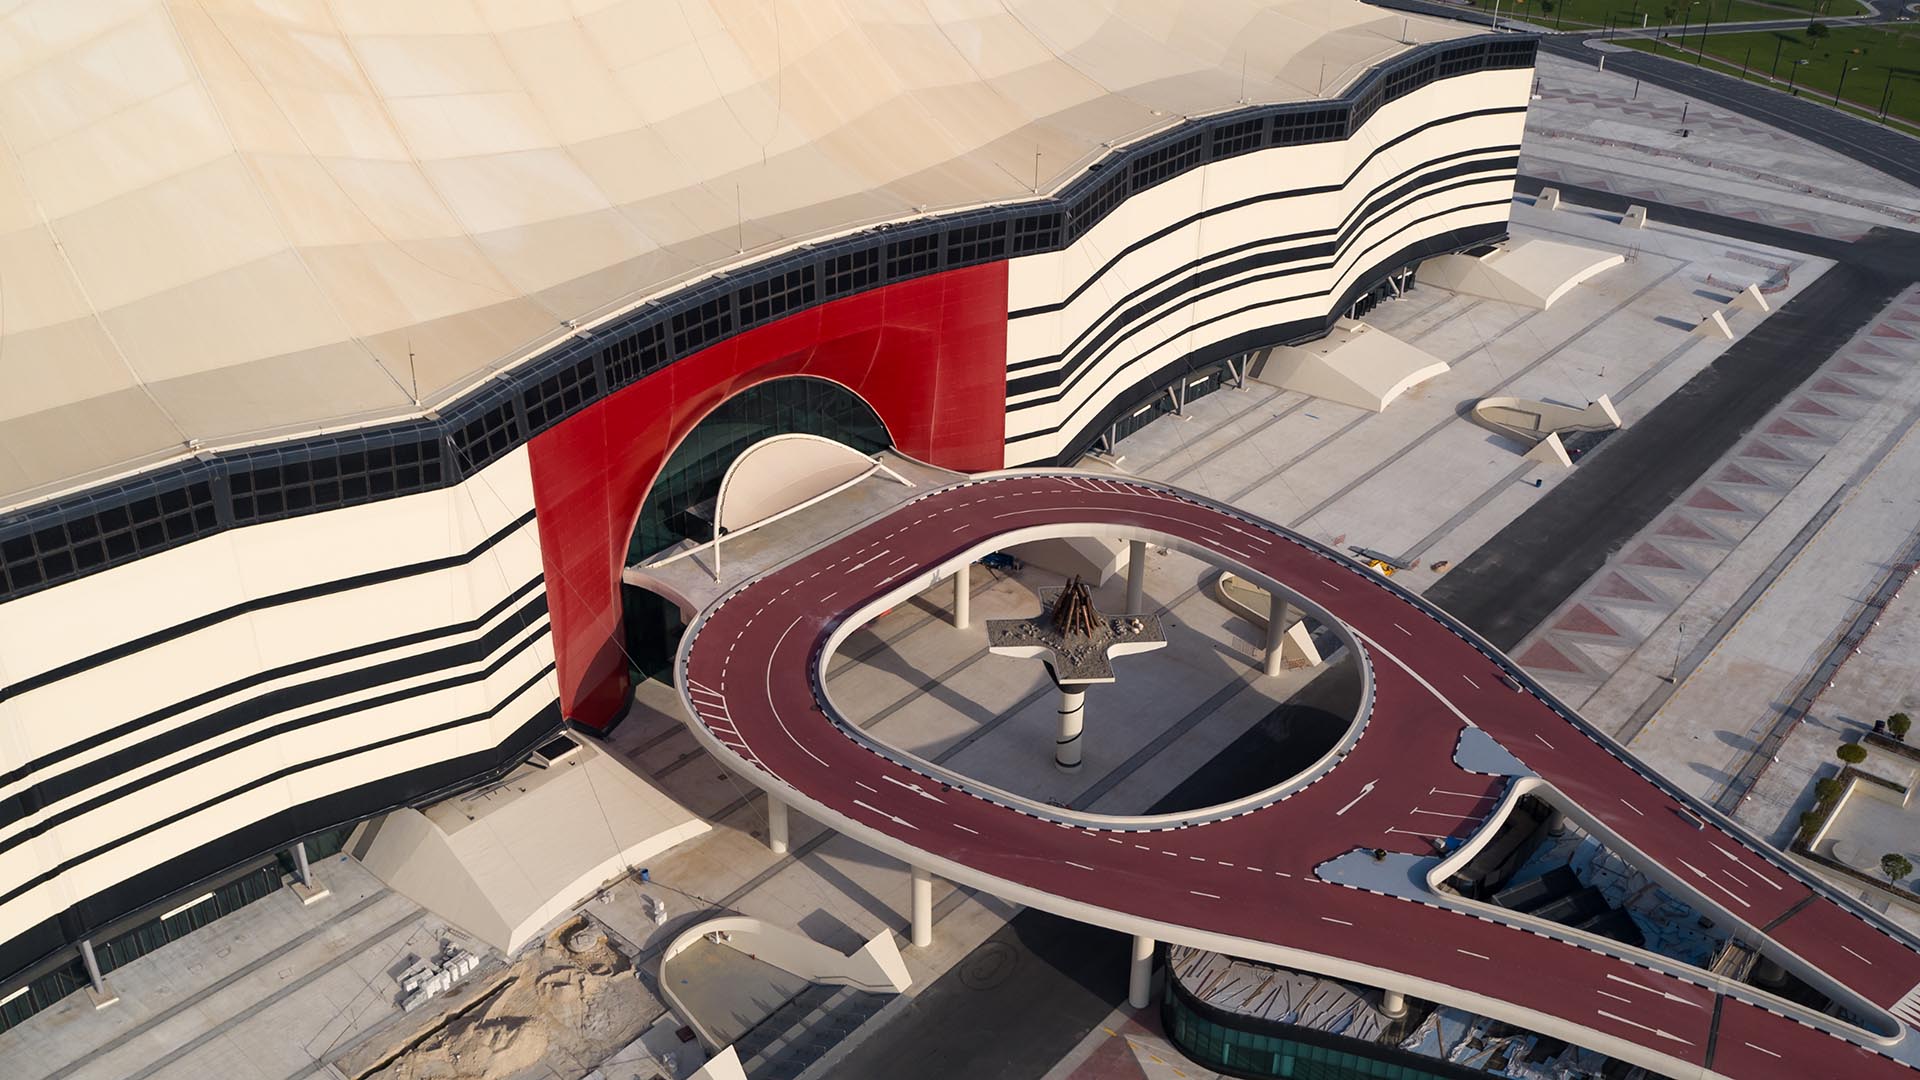 Estadios Qatar 2022